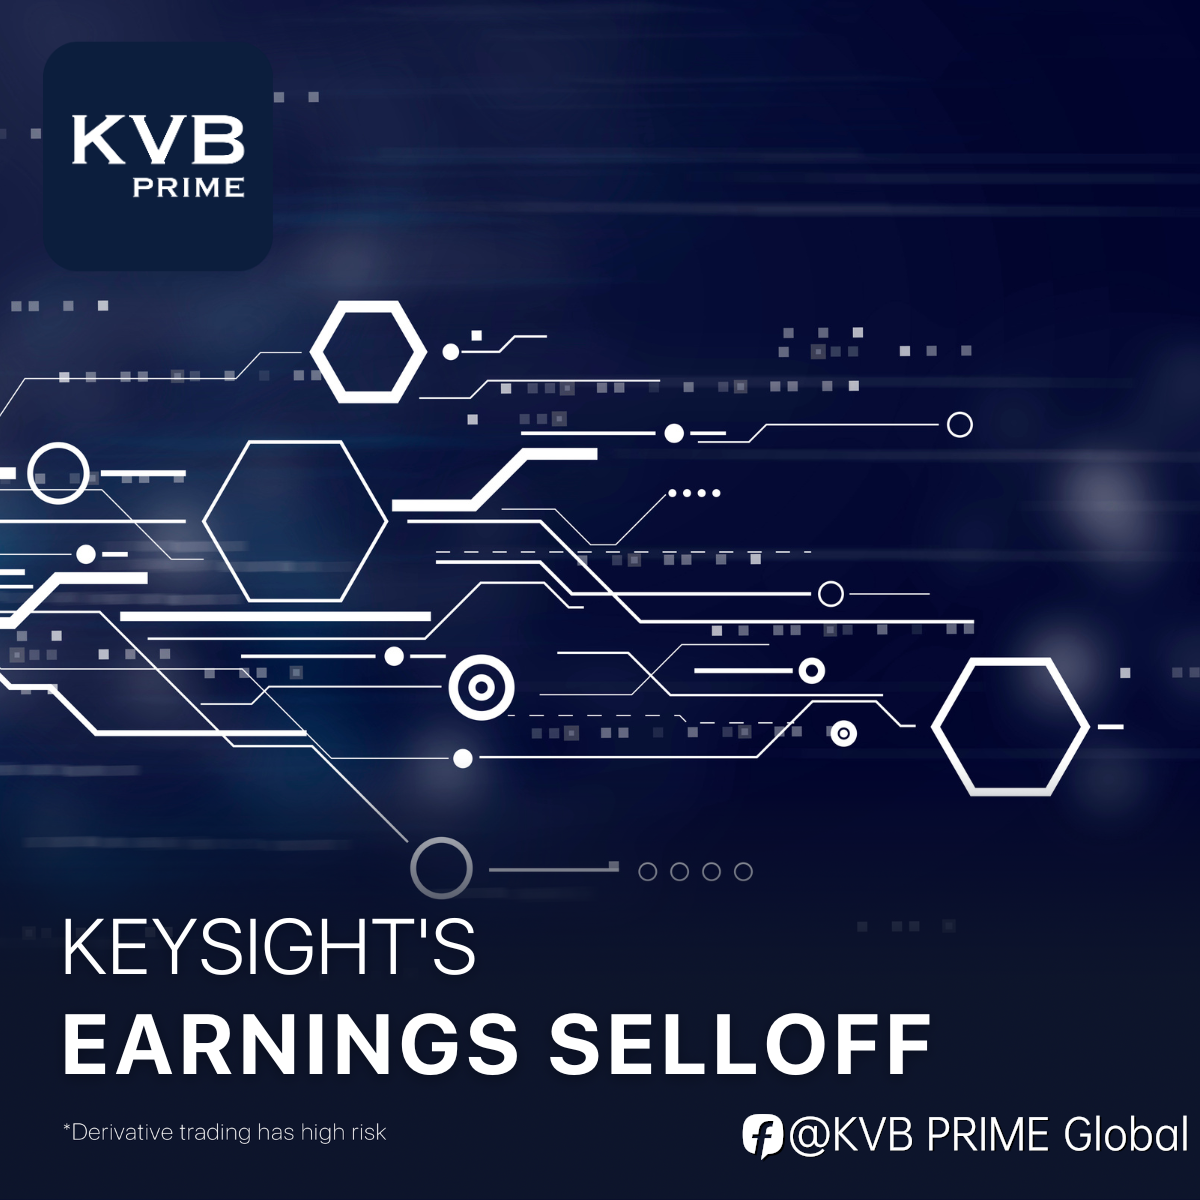 Keysight's earnings selloff intensifies after Barclays downgrade.